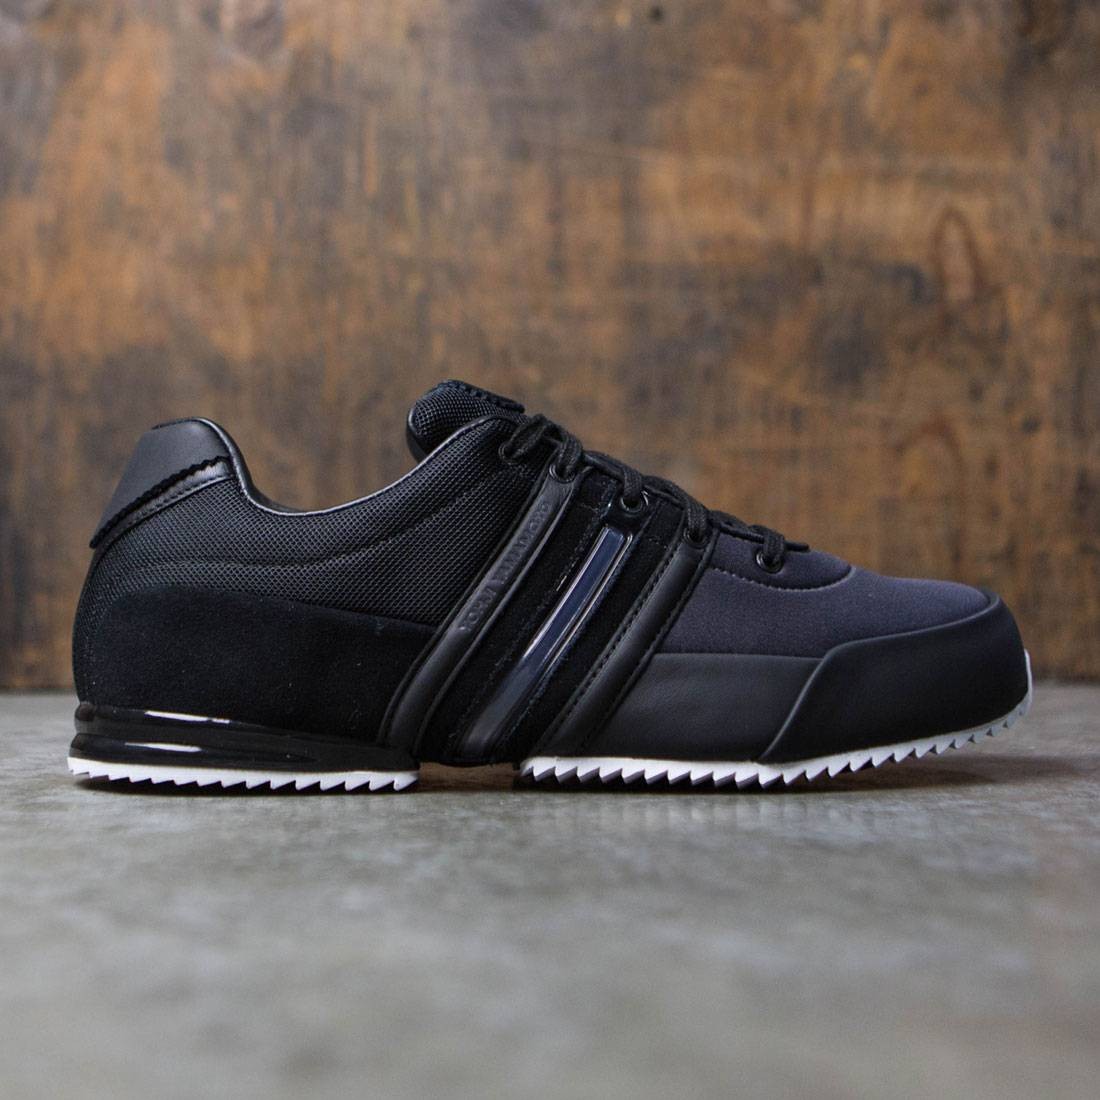 Adidas Y-3 Men Sprint (black / utility black / core black / footwear white)